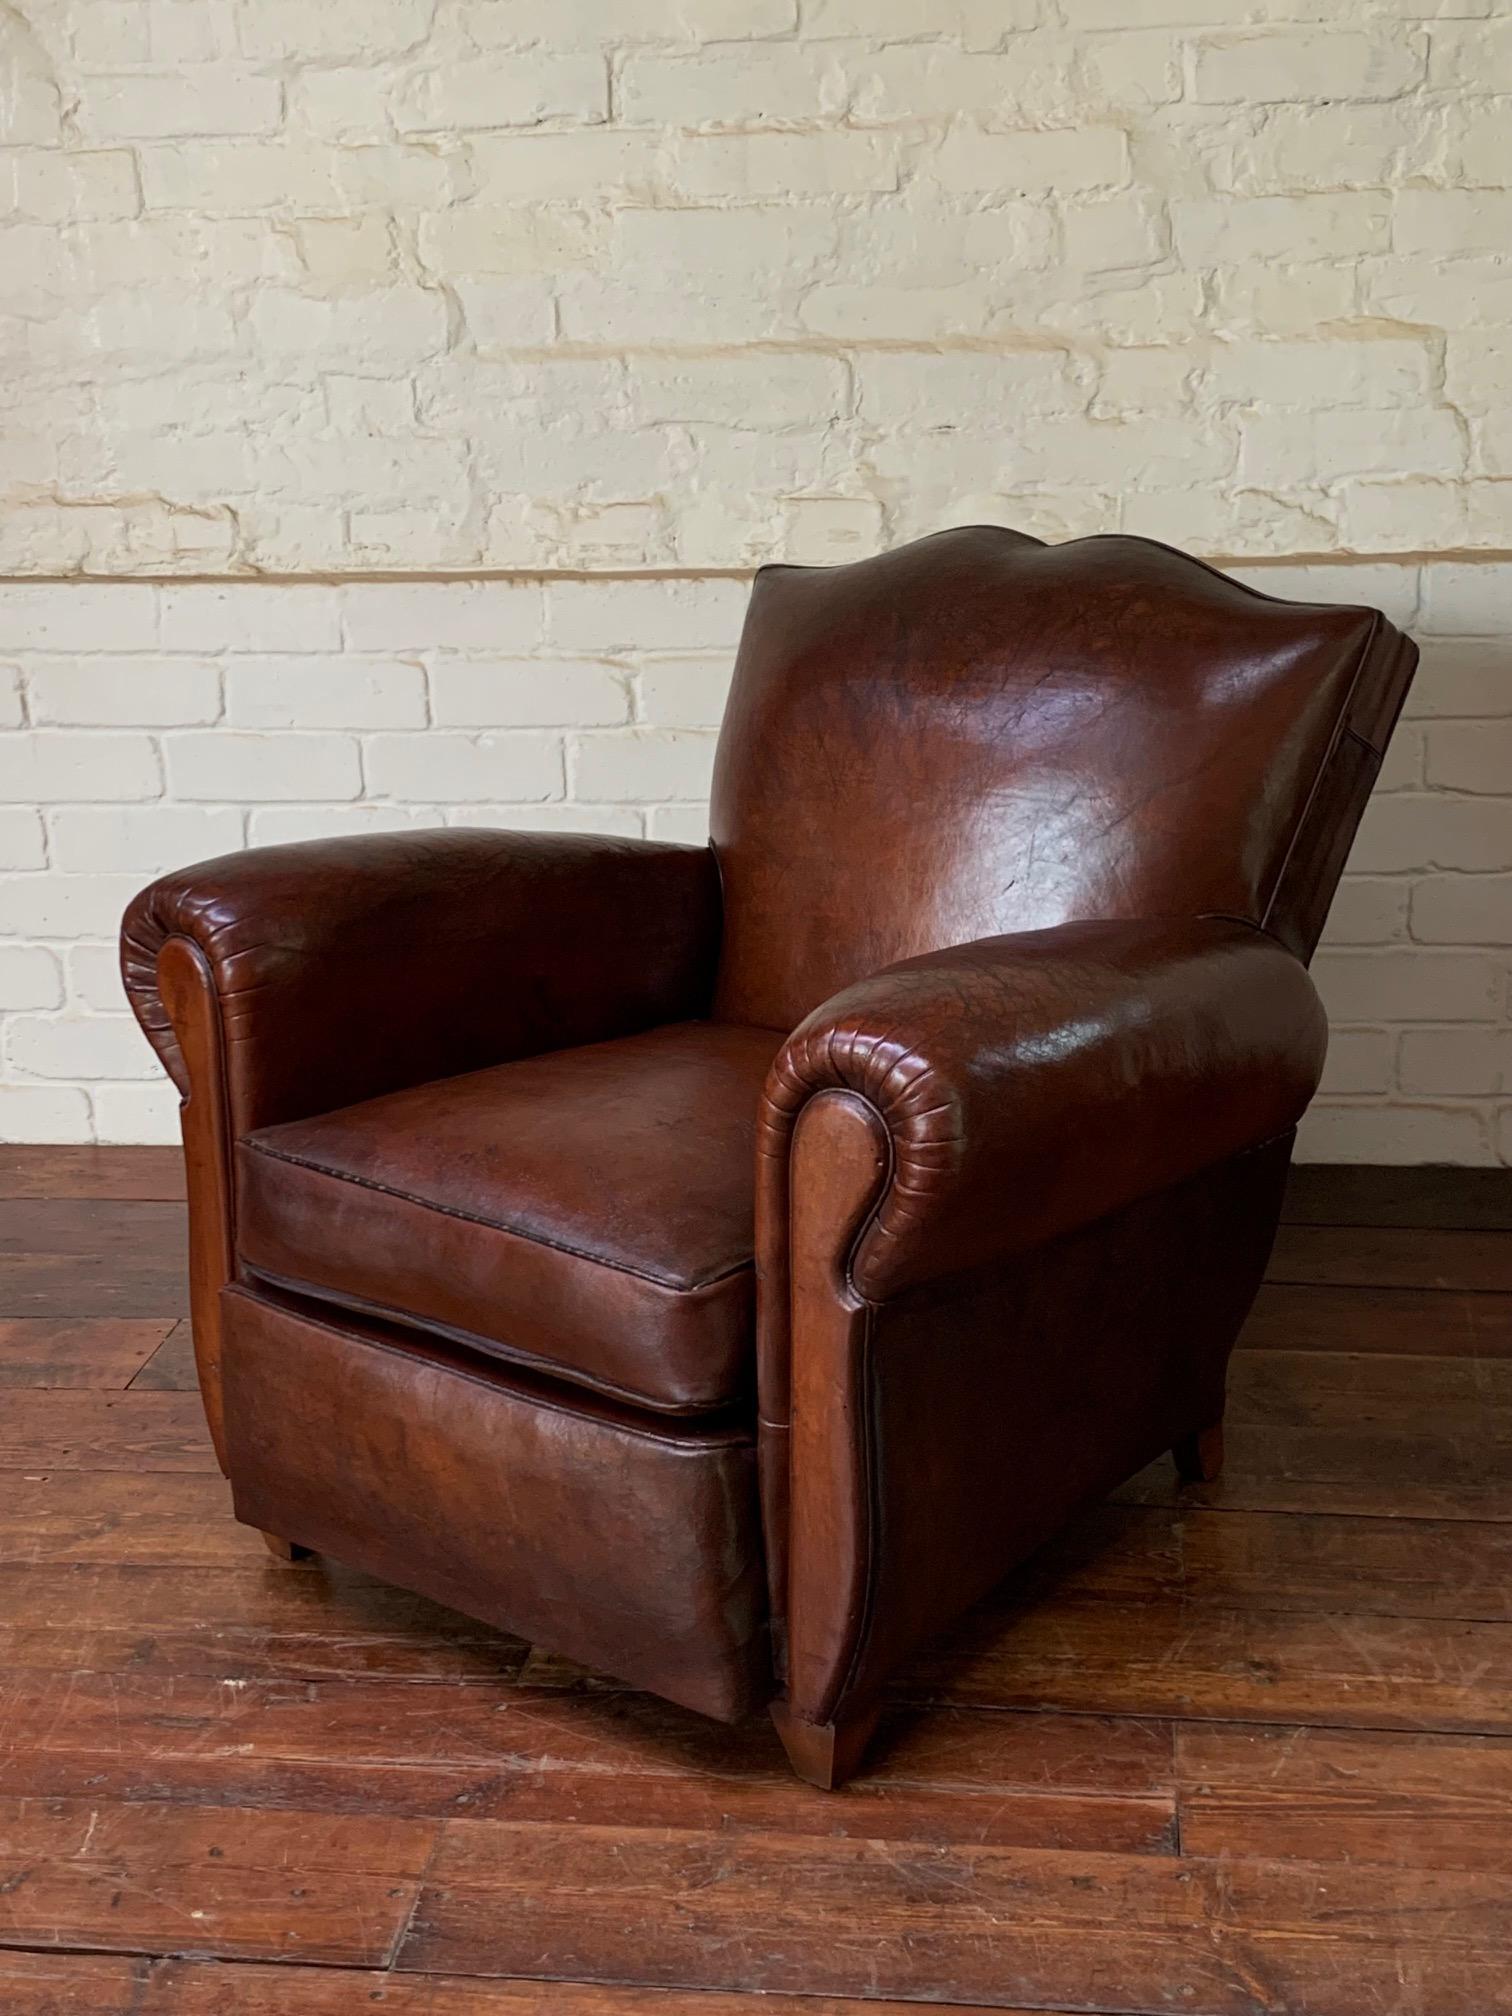 Art Deco A Superb French, Leather Club Chair, Havana Moustache Model Circa 1950's For Sale